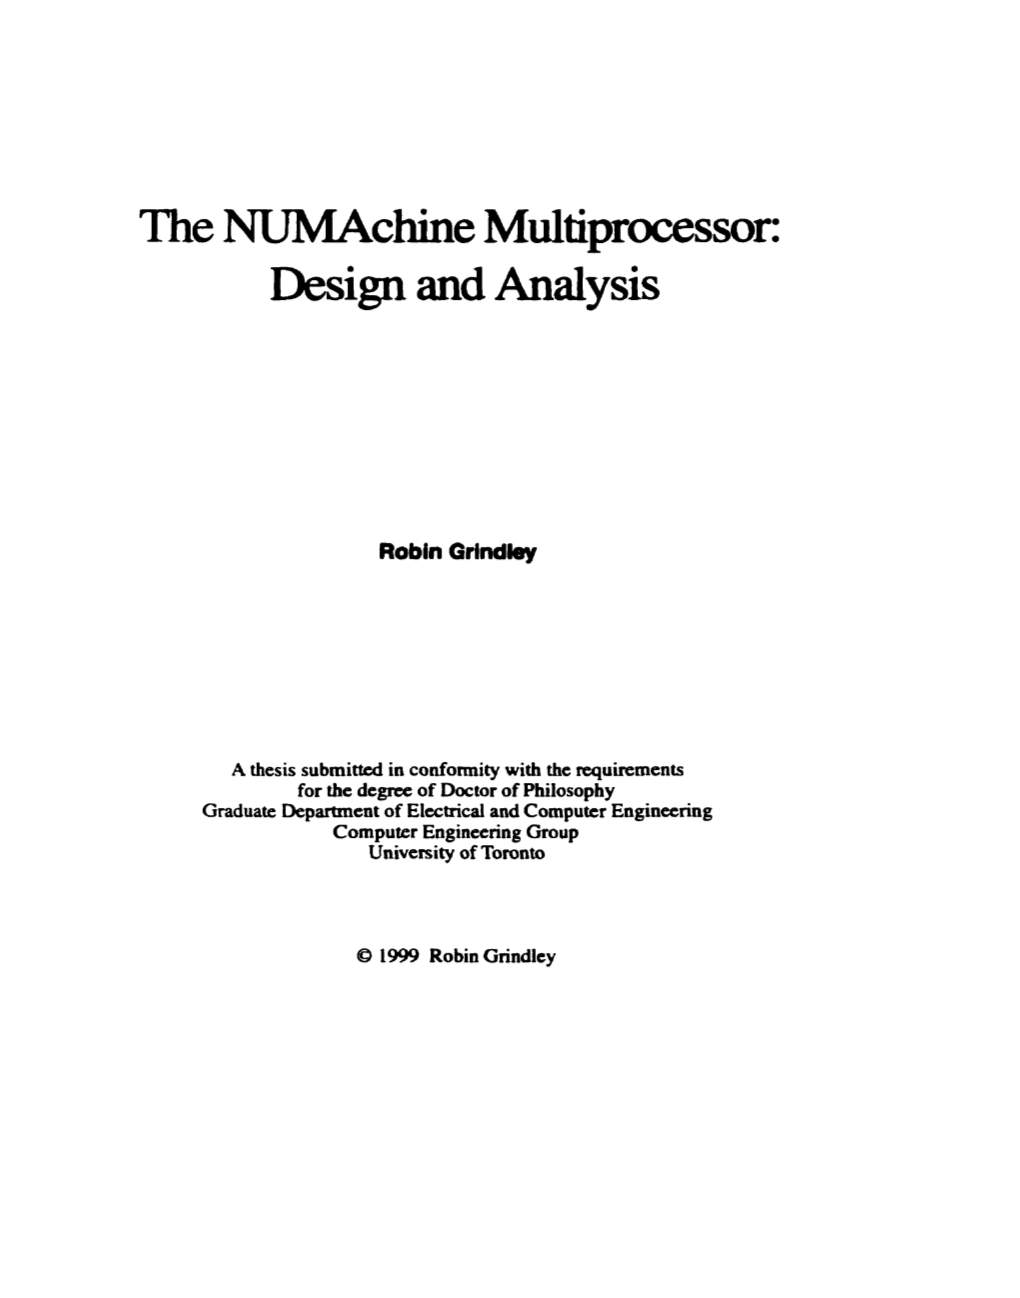 The Numachine Multiprocessor: Design and Analysis